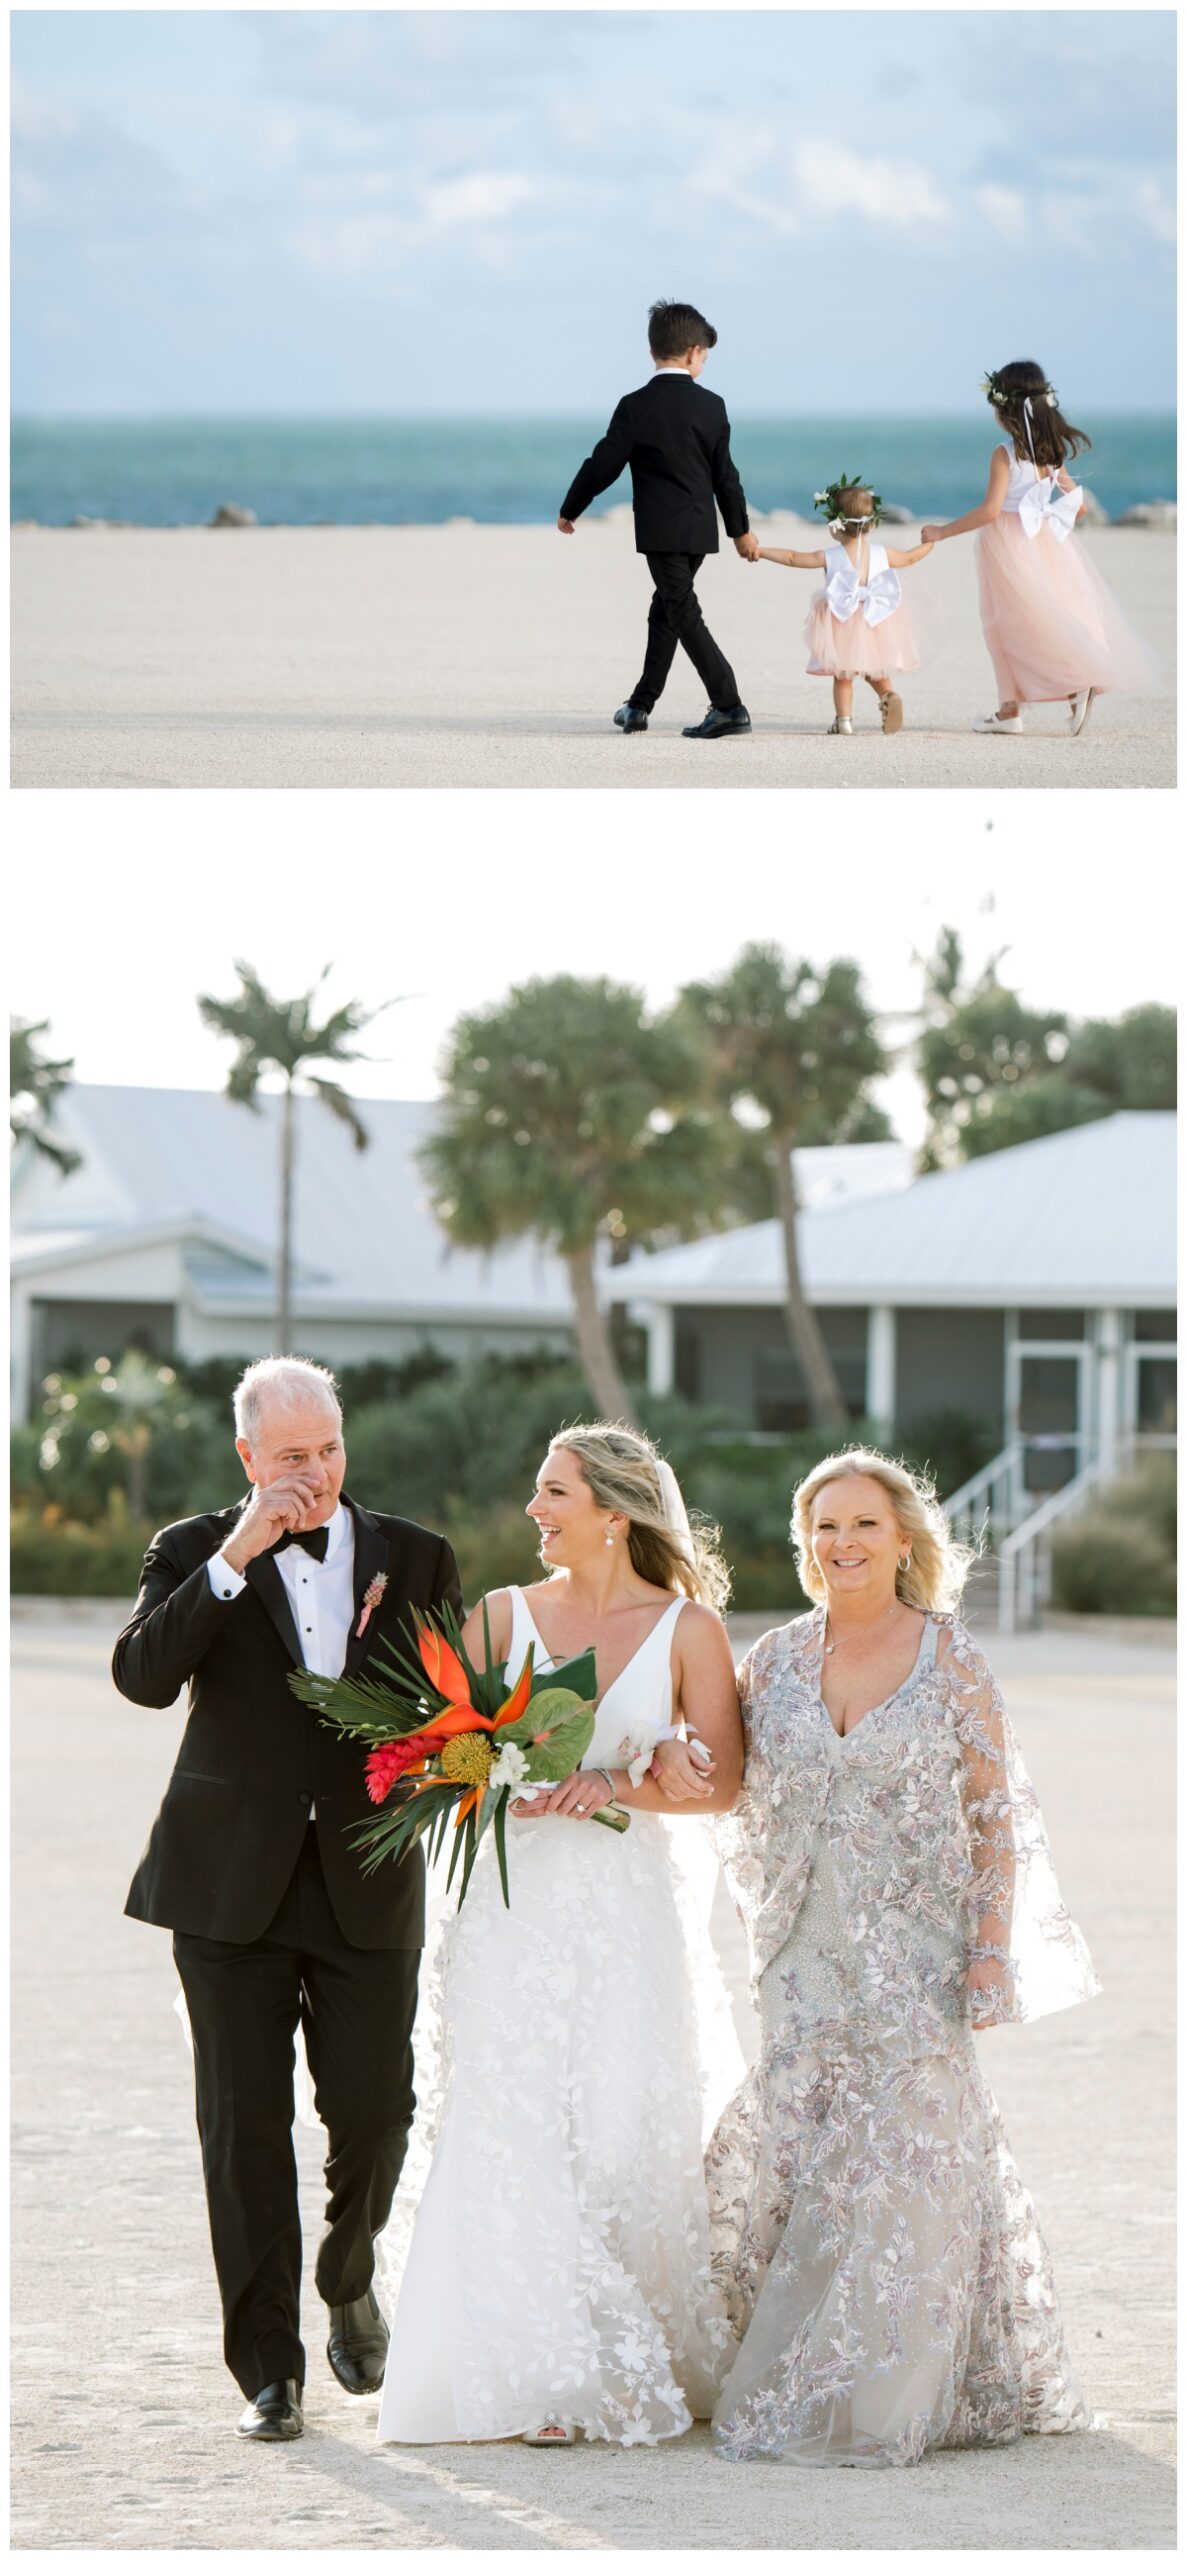 Florida Keys beach wedding ceremony in Islamorada, Florida